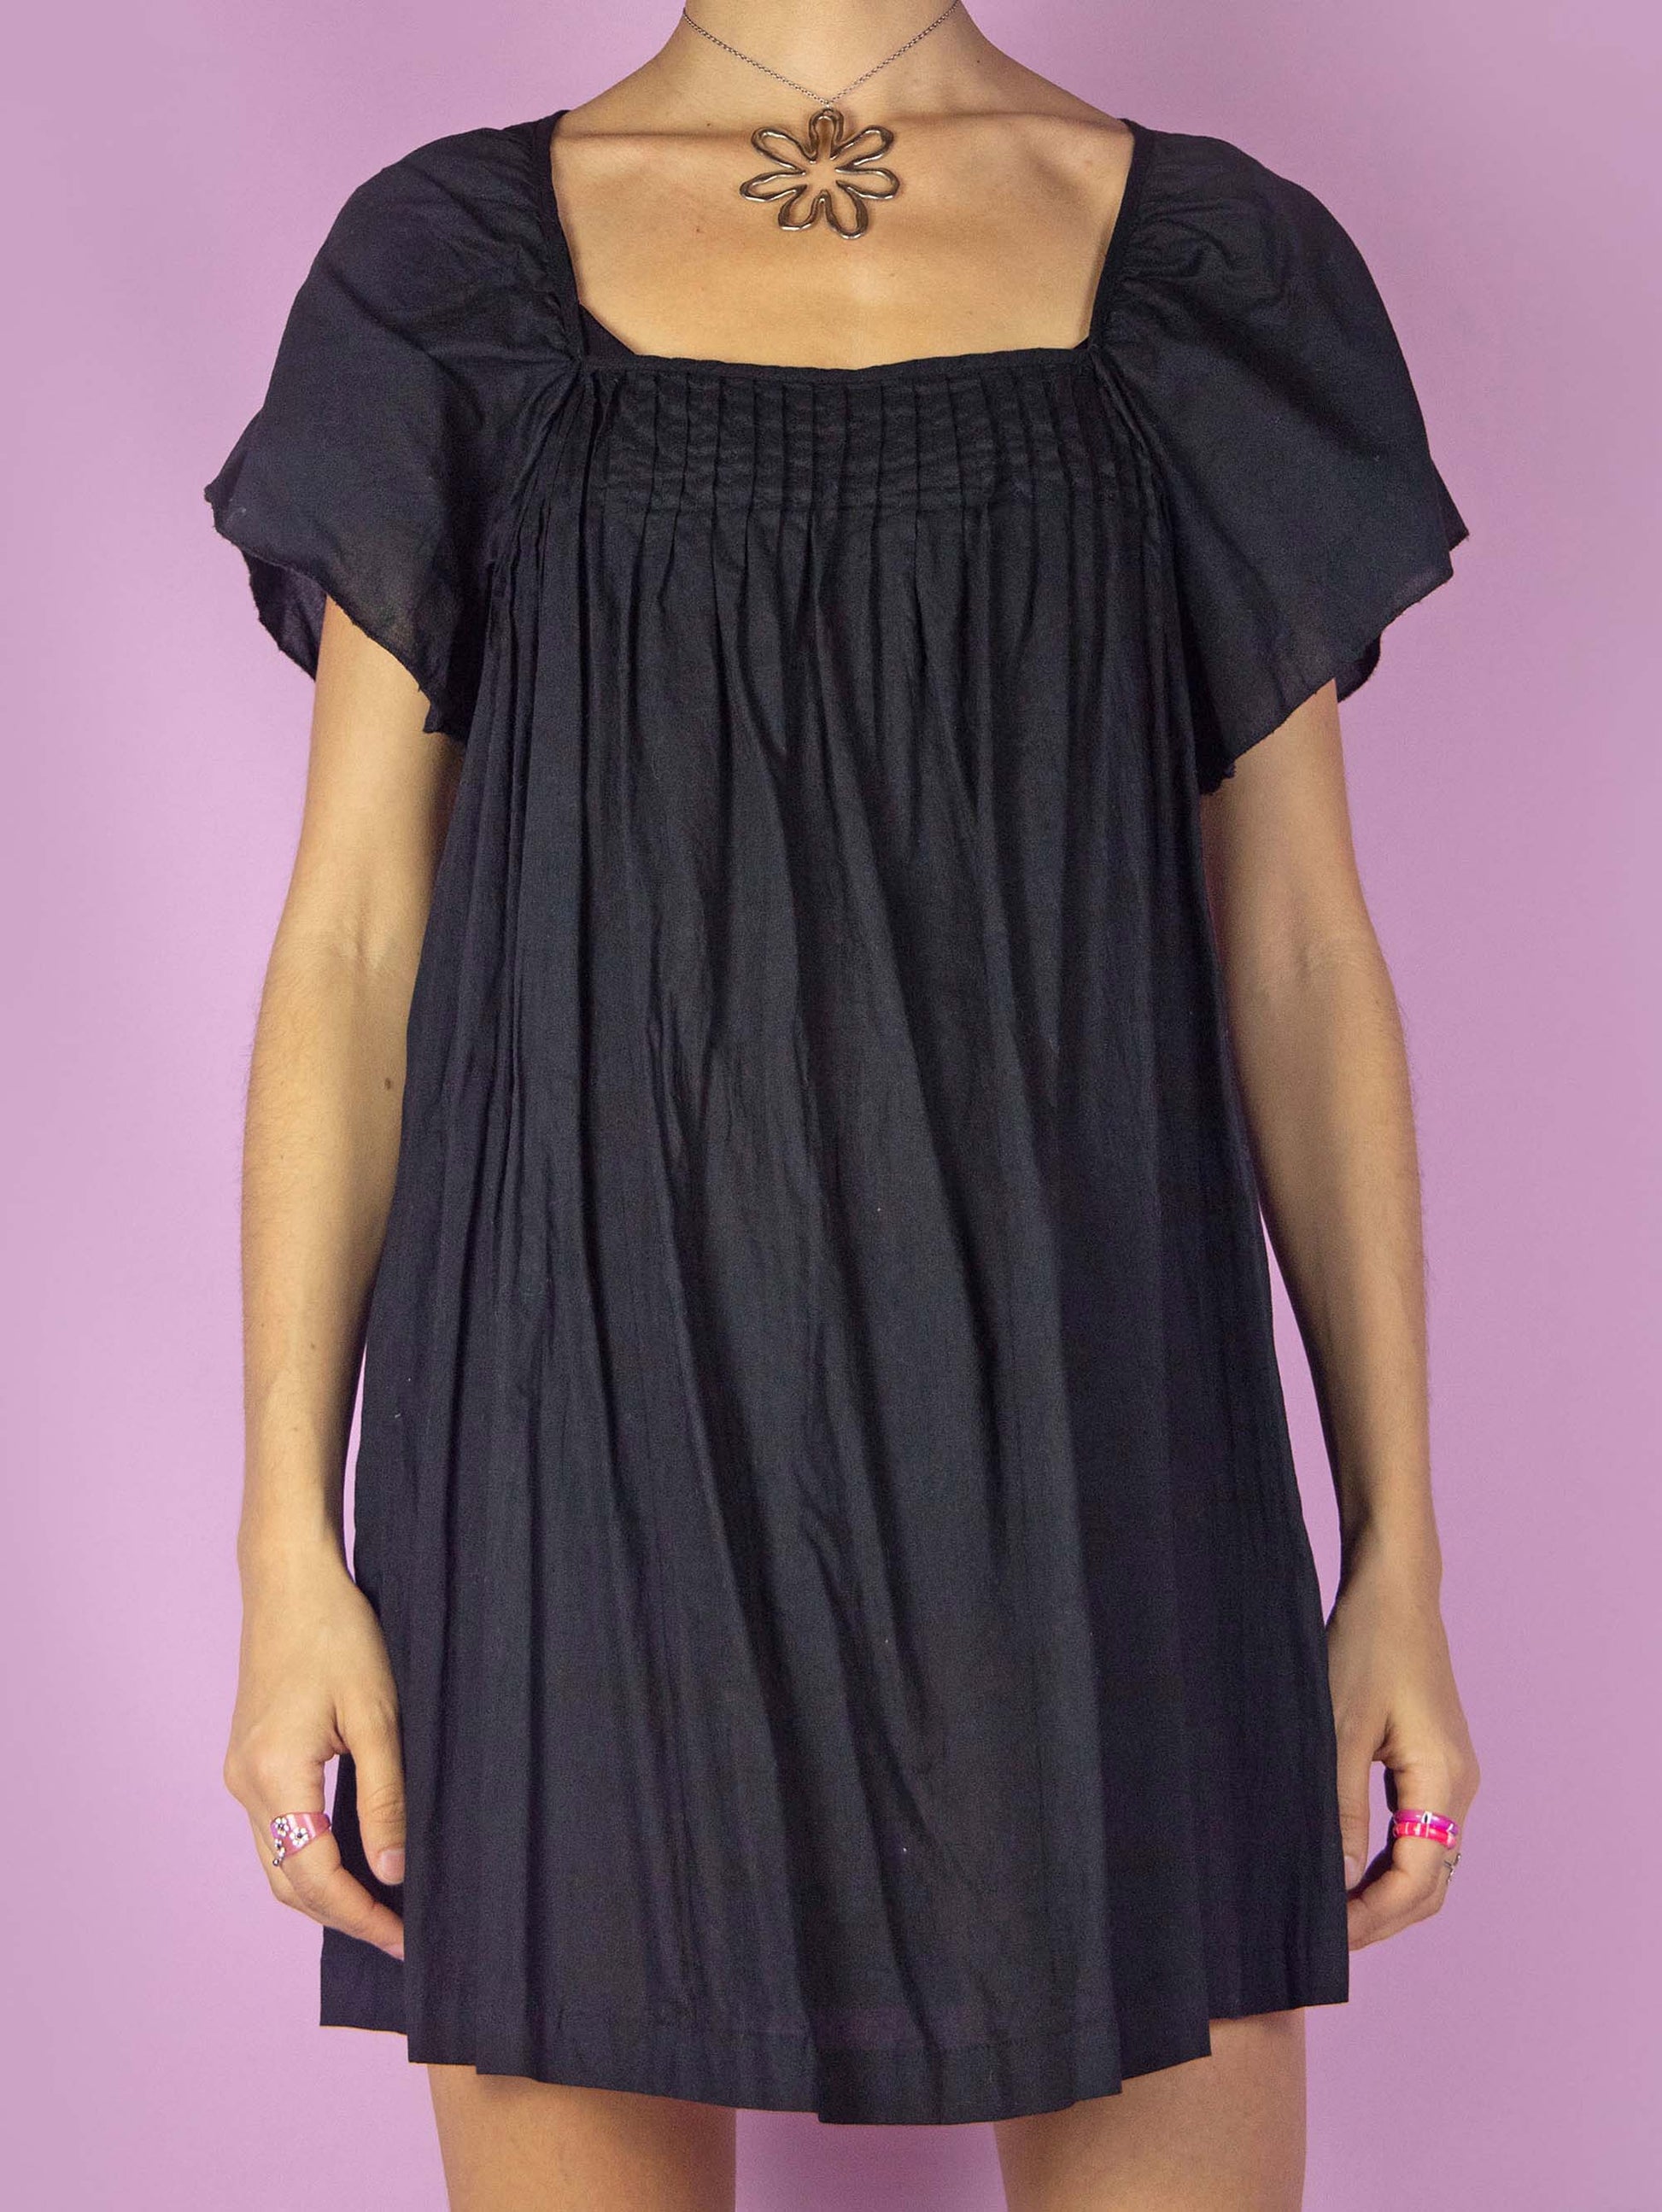 The Y2K Black Trapeze Mini Dress is a vintage short-sleeved dress. Boho summer 2000s beach babydoll dress.